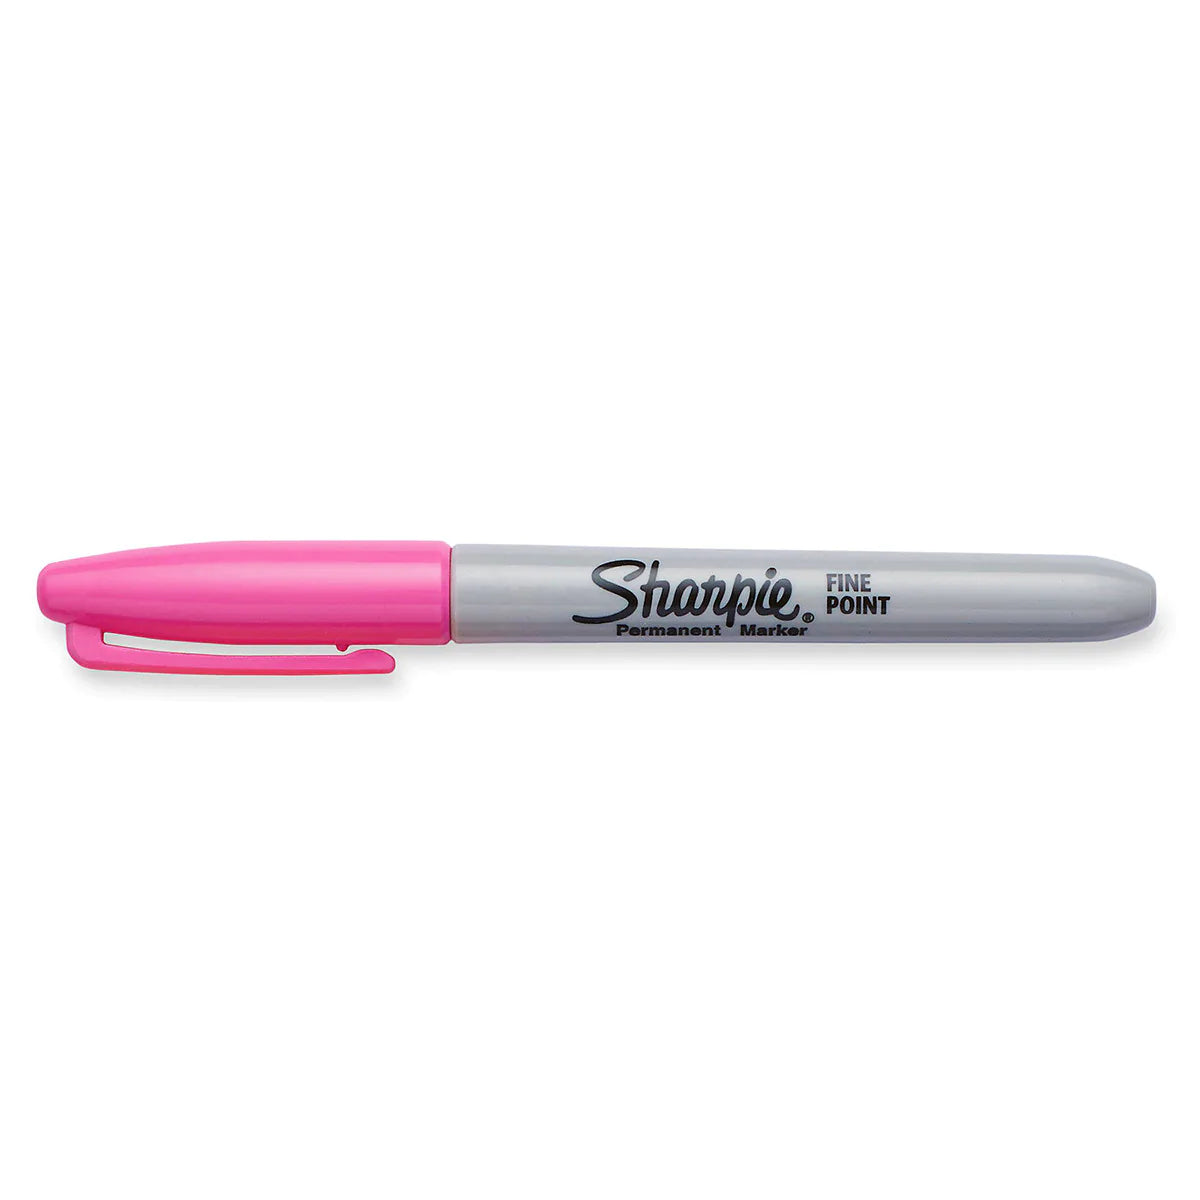 Sharpie • Fine Point • Permanent Markers • Colors - Pink by Sharpie - K. A. Artist Shop